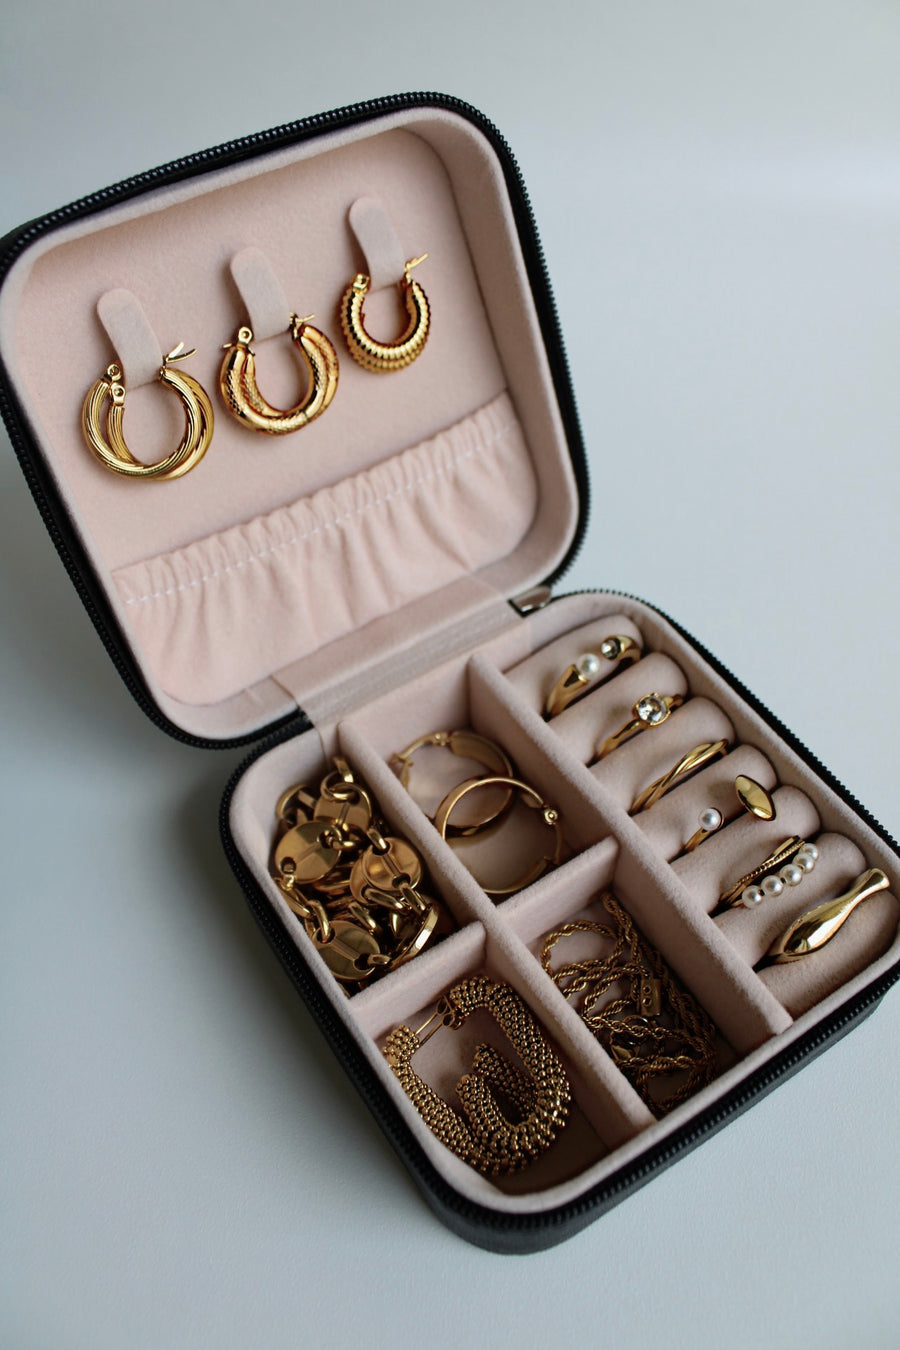 Jewelry case